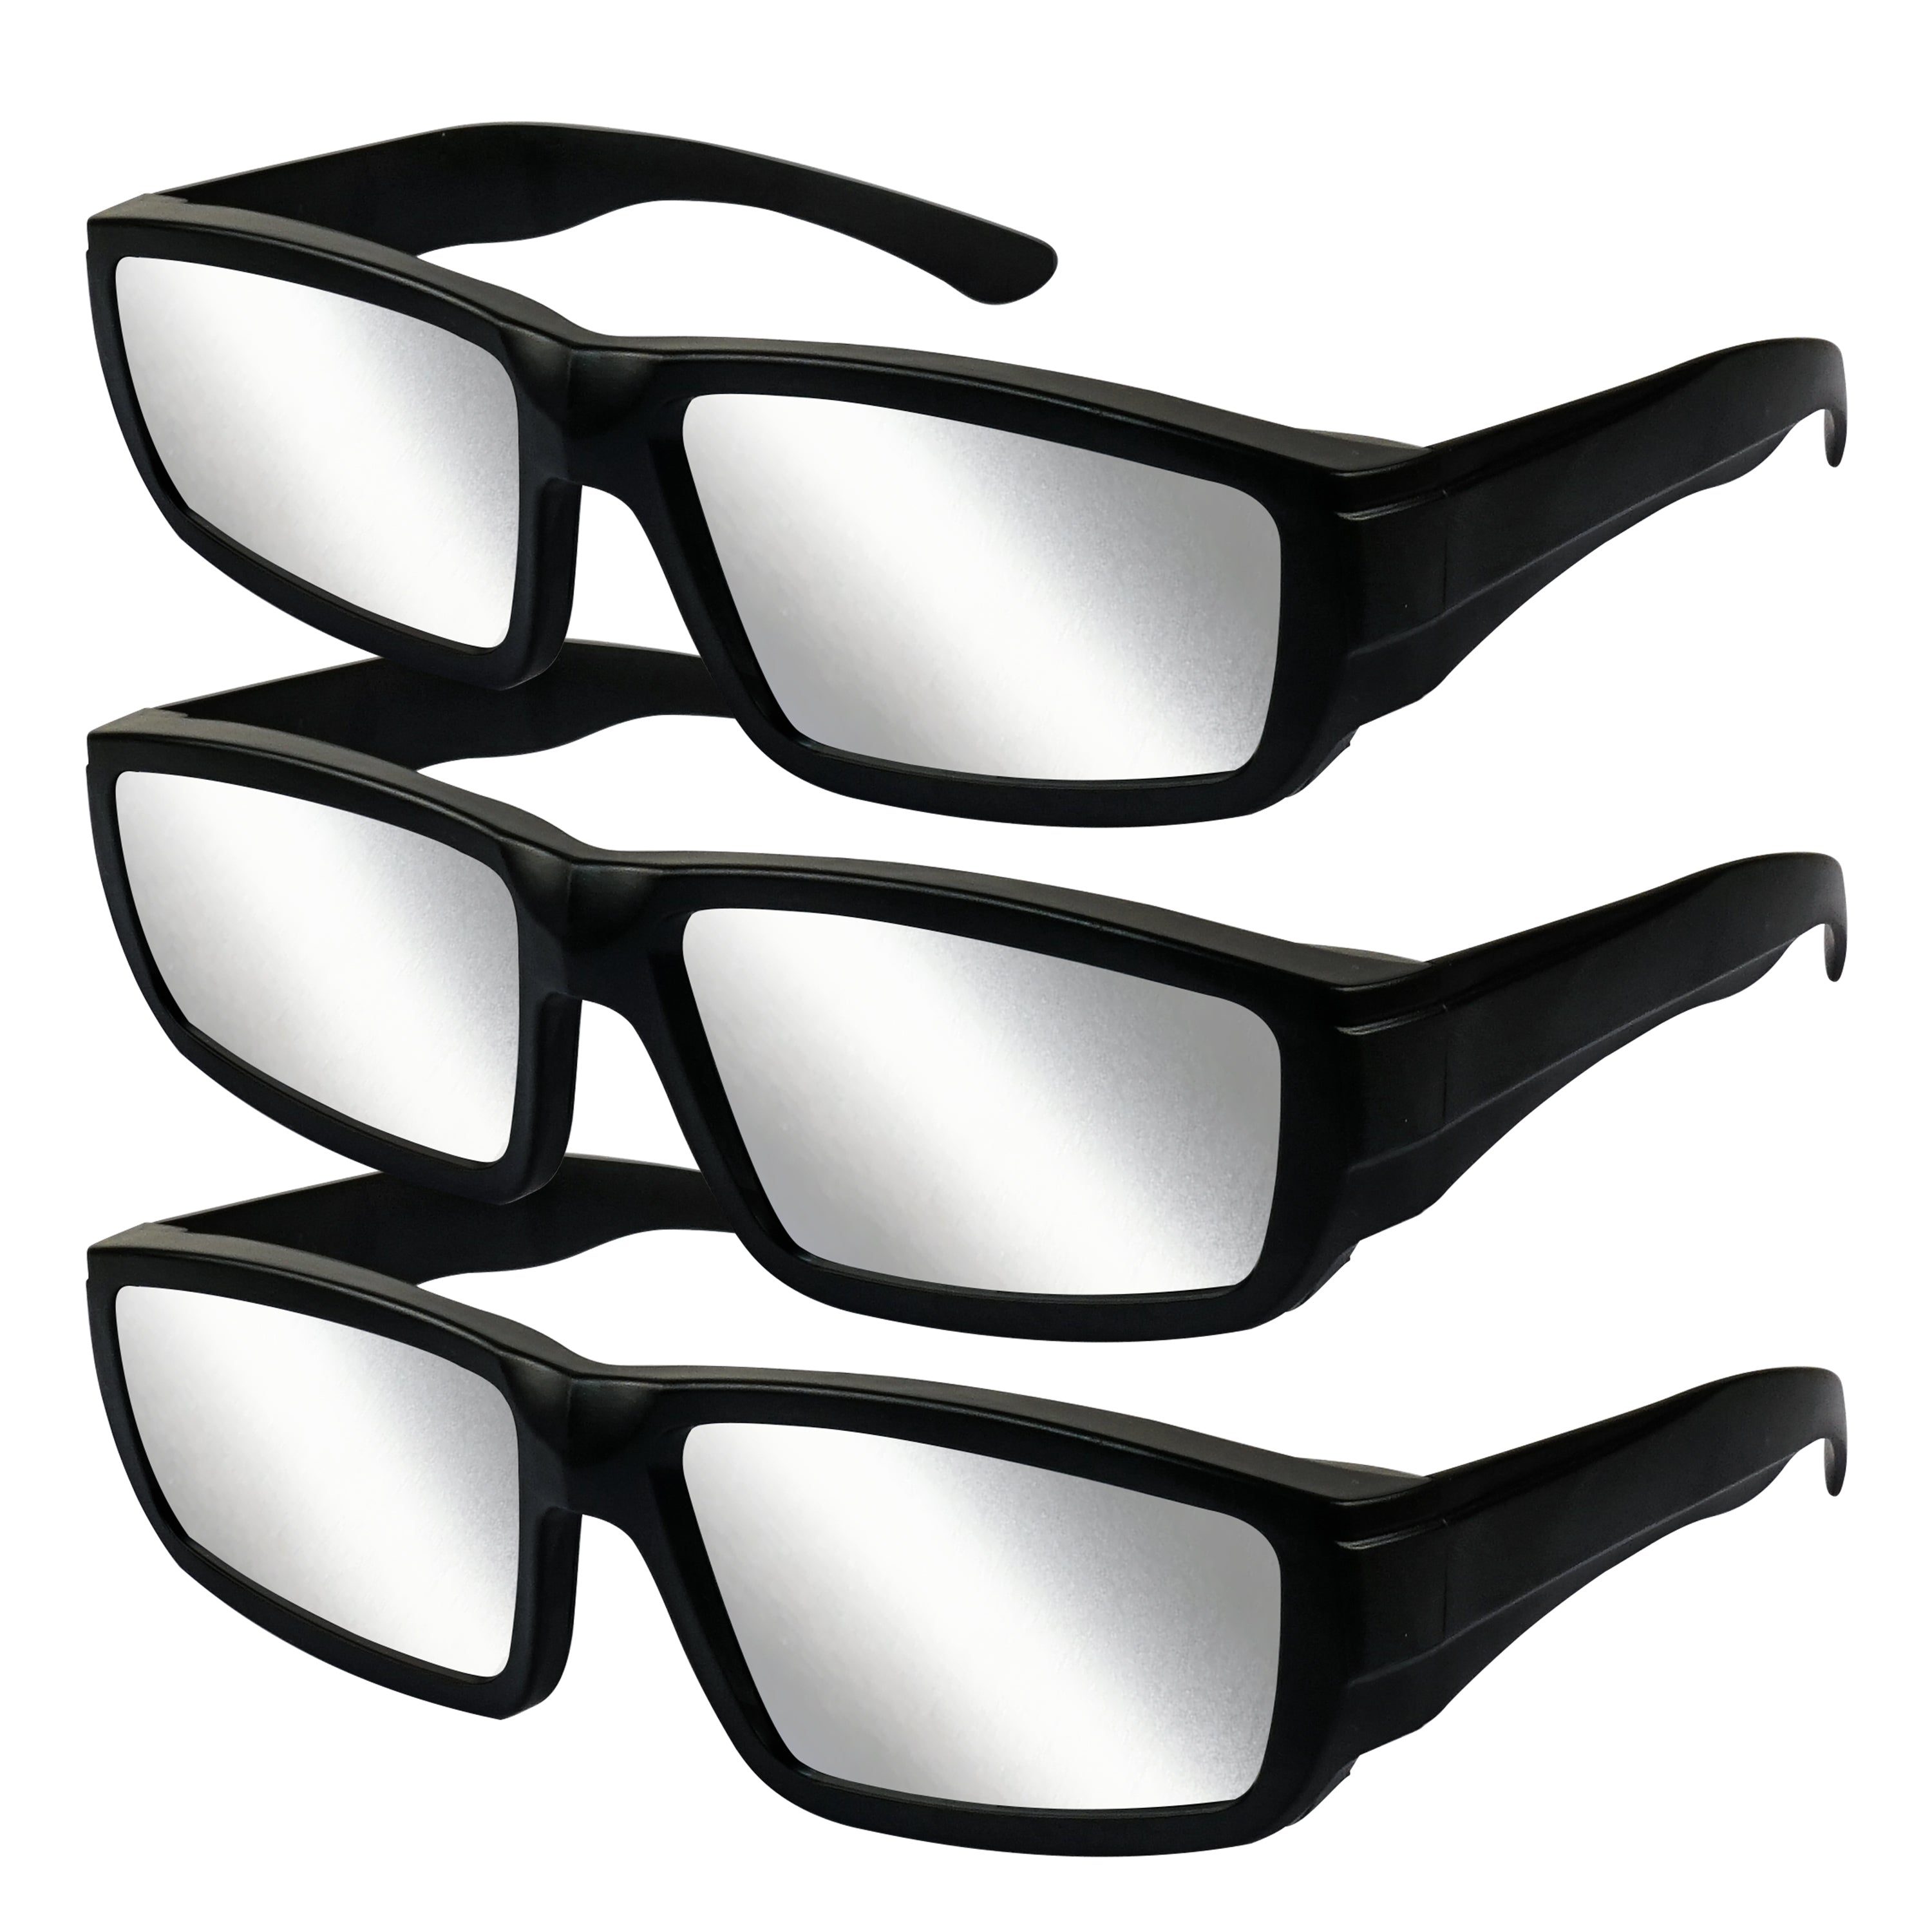 Solar Eclipse Glasses - ISO 12312-2:2015(E) & CE Certified, Durable Plastic Eclipse Glasses for Direct Sun Viewing